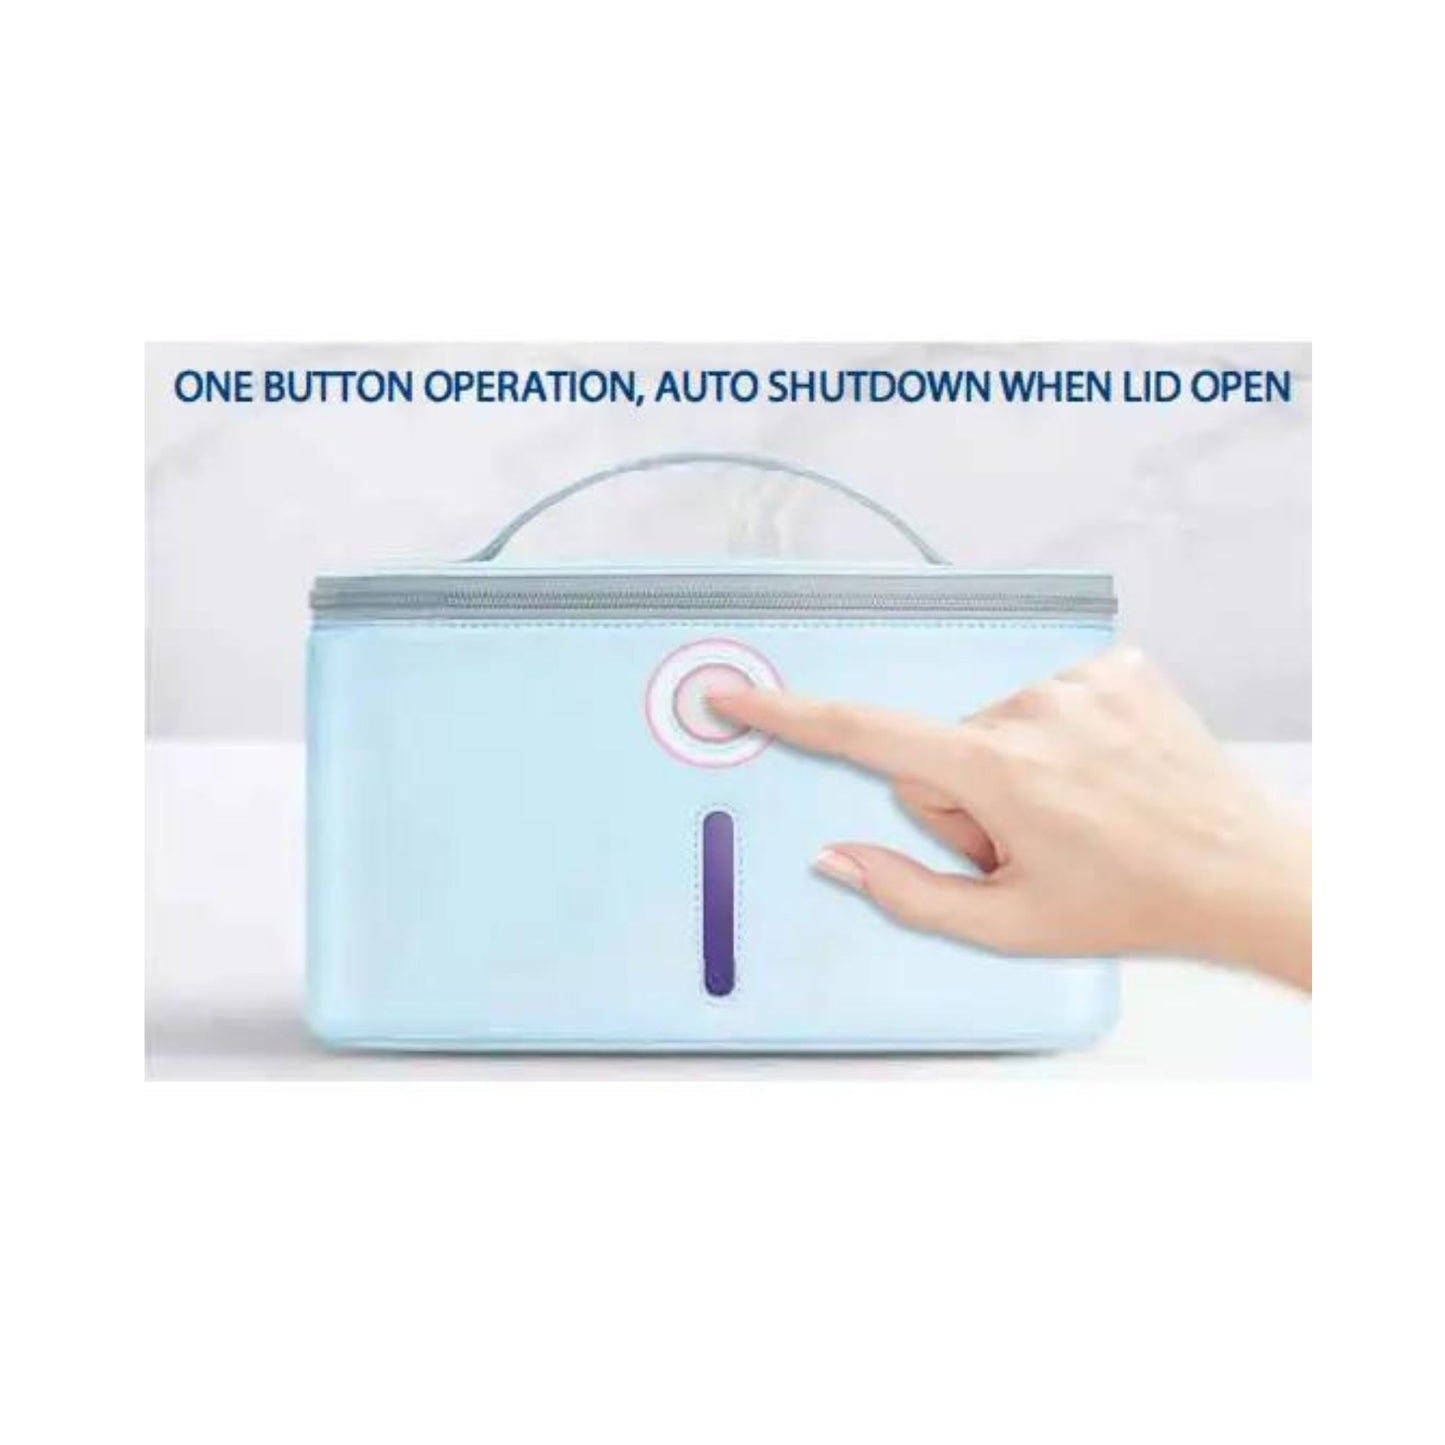 LiViliti PRO Sanitizer Bag, one button operation